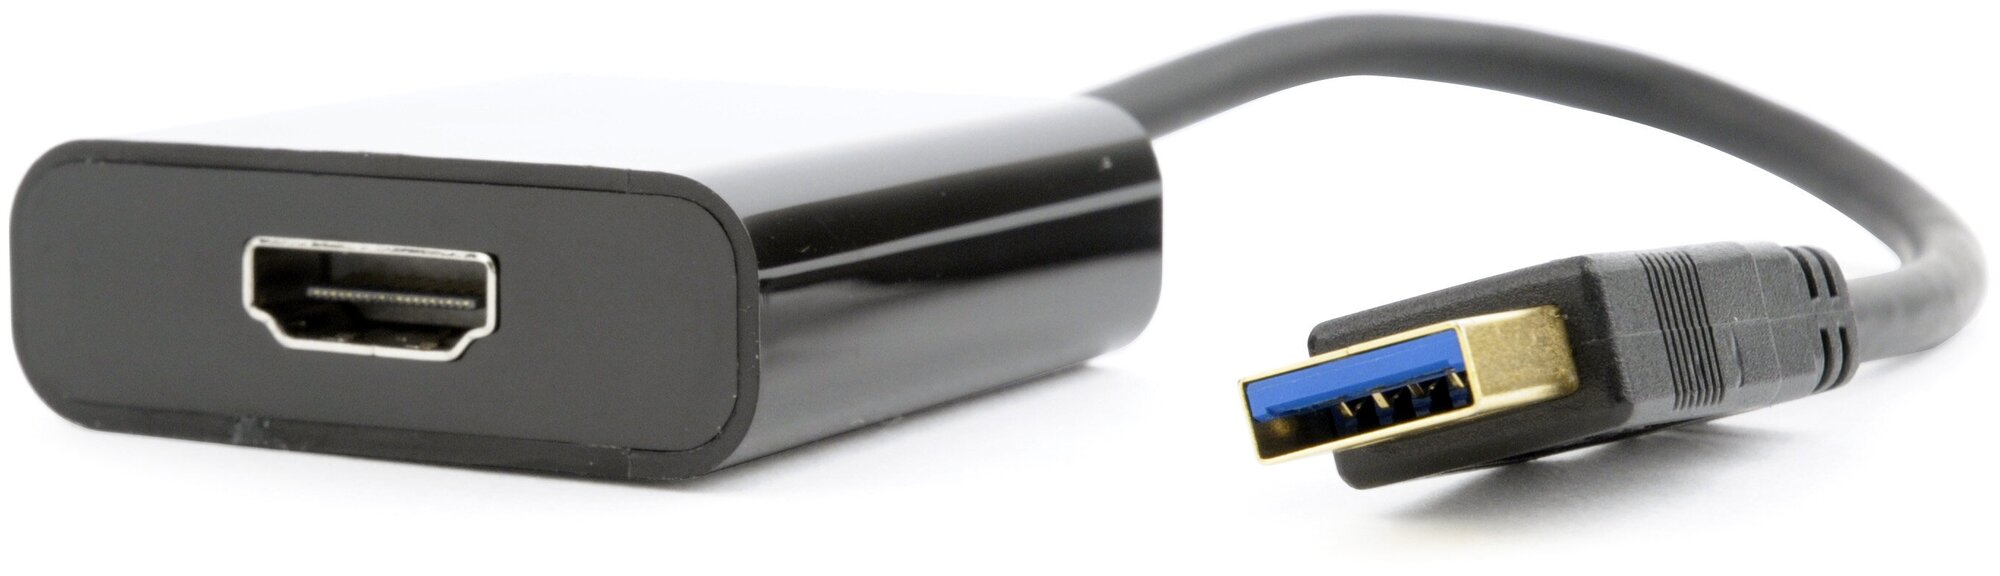 Аксессуар Gembird Cablexpert USB 30 - HDMI A-USB3-HDMI-02